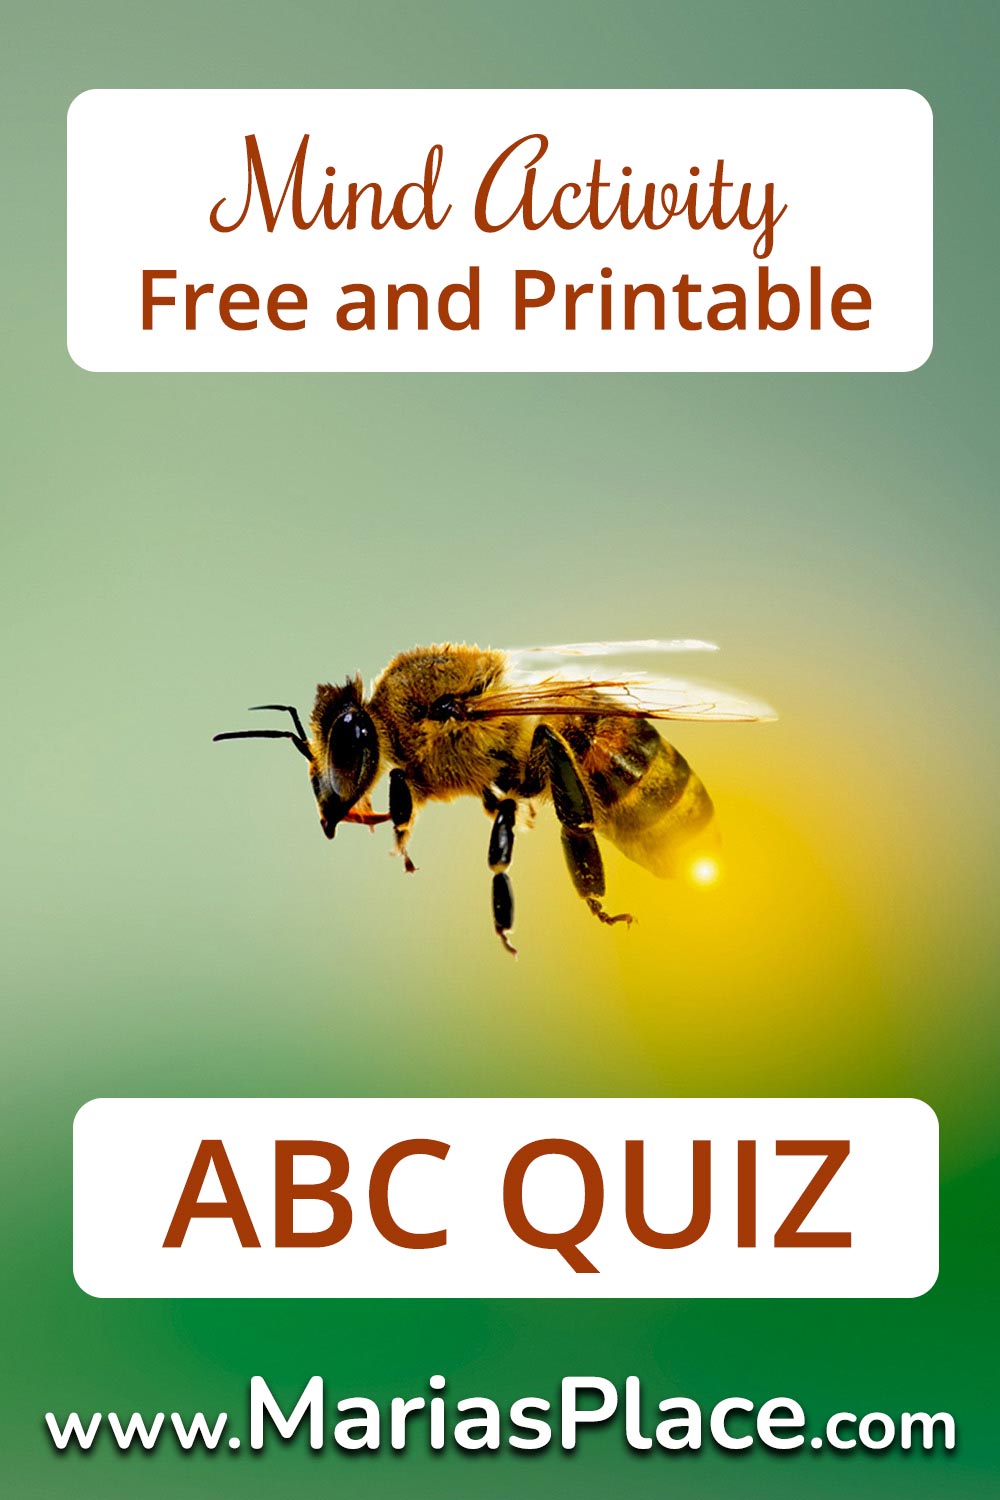 ABC Quiz #7